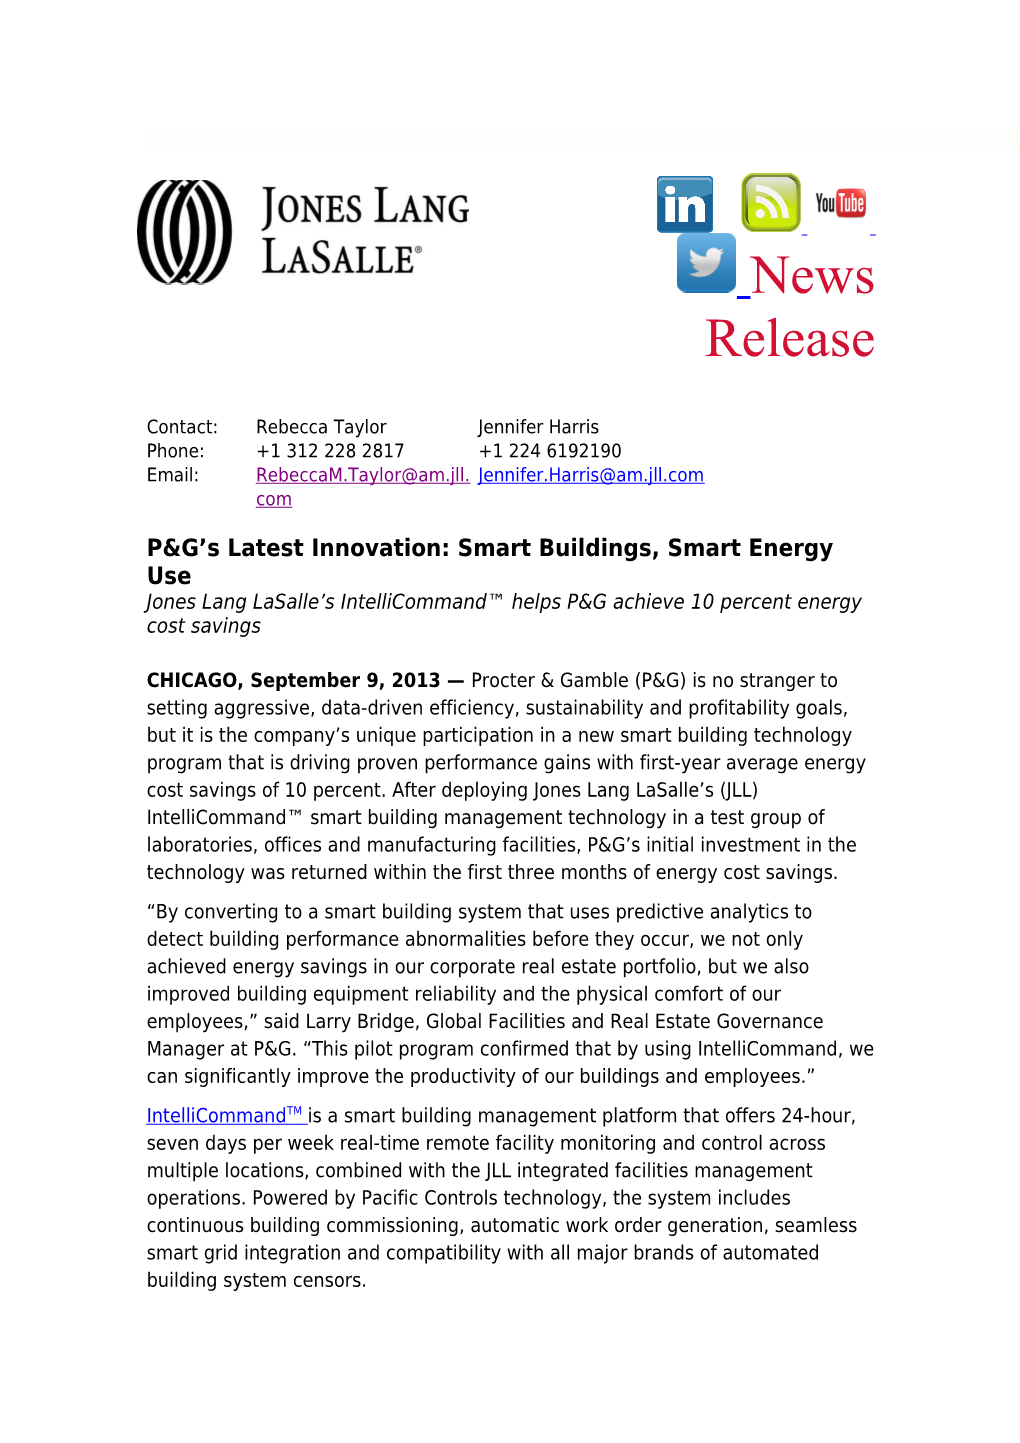 P&G S Latest Innovation: Smart Buildings, Smart Energy Use